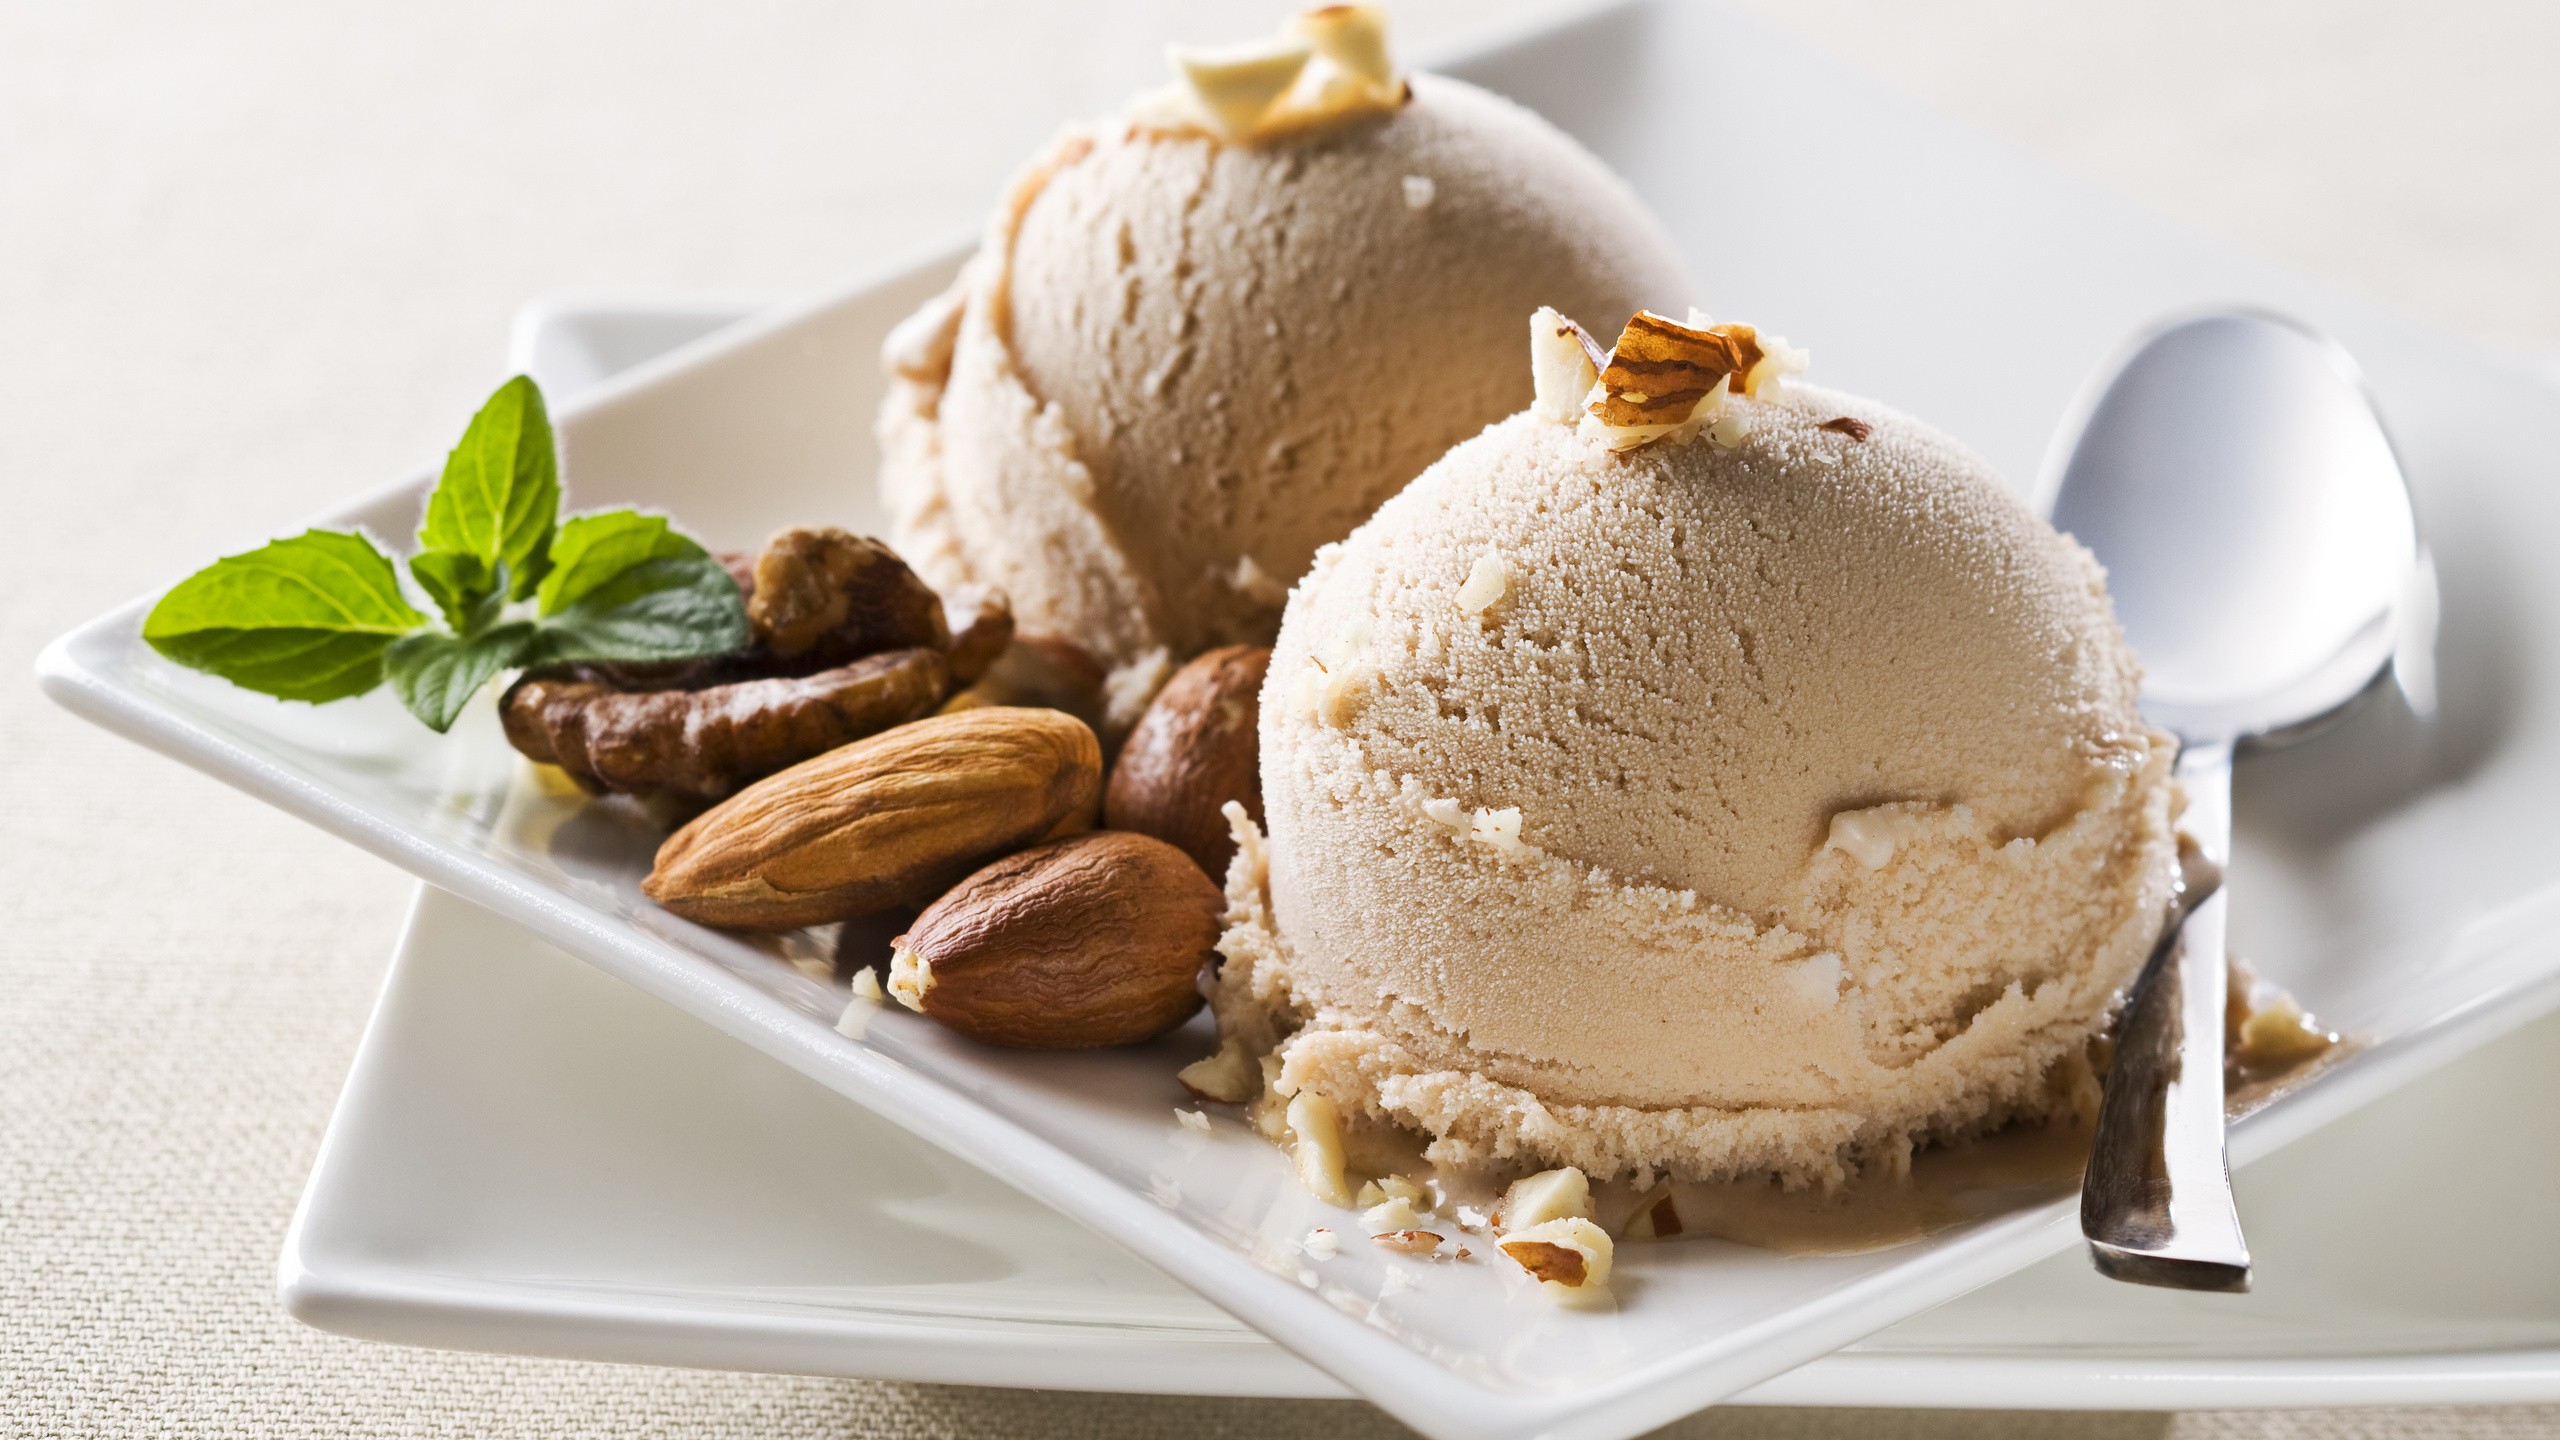 General 2560x1440 food ice cream dessert nuts walnuts sweets spoon almonds